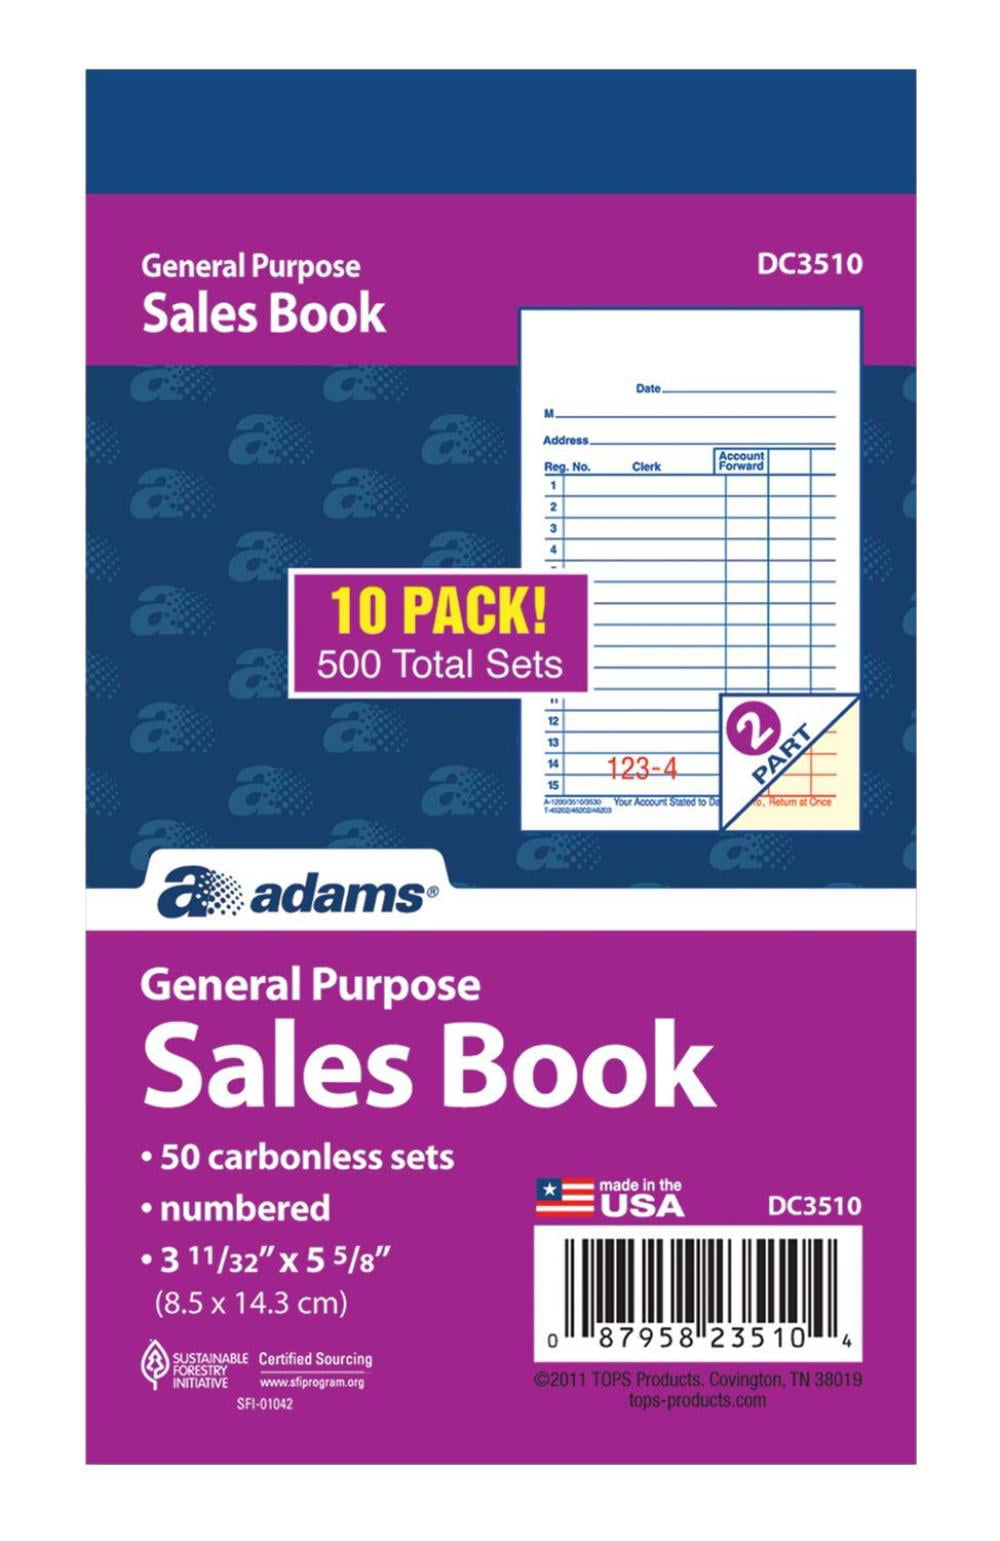 New Sales Book Order Receipt Invoice Carbon less 50 sets 3.5"x5.5" US Seller 